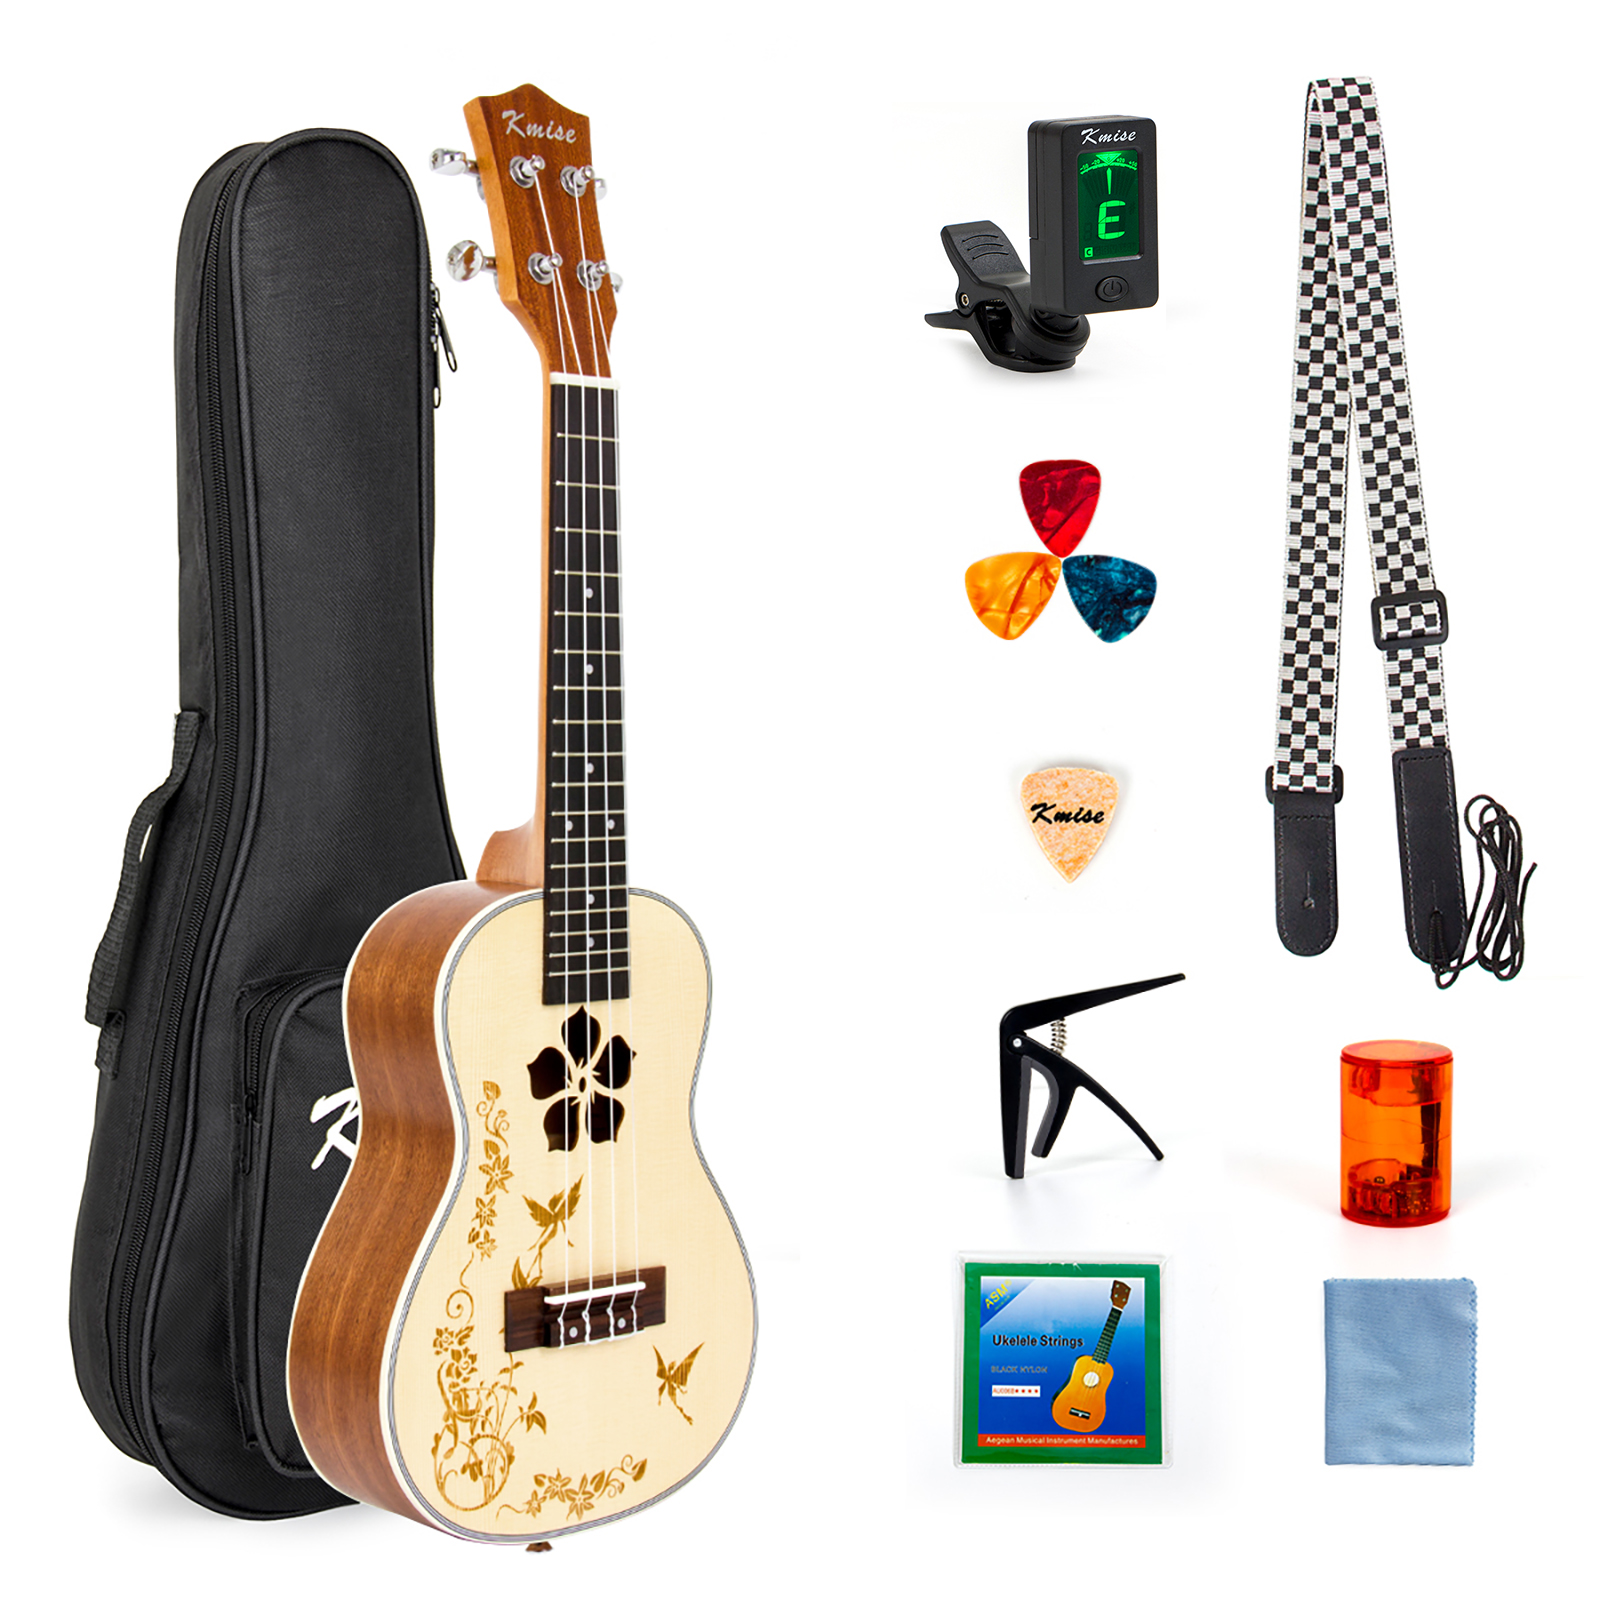 Kmise Professional Concert Ukulele Beginner Kit Solid Spruce Mahogany 23 Ukelele Uke Hawaii Guitar 18 Fret for Starter and Music Lover